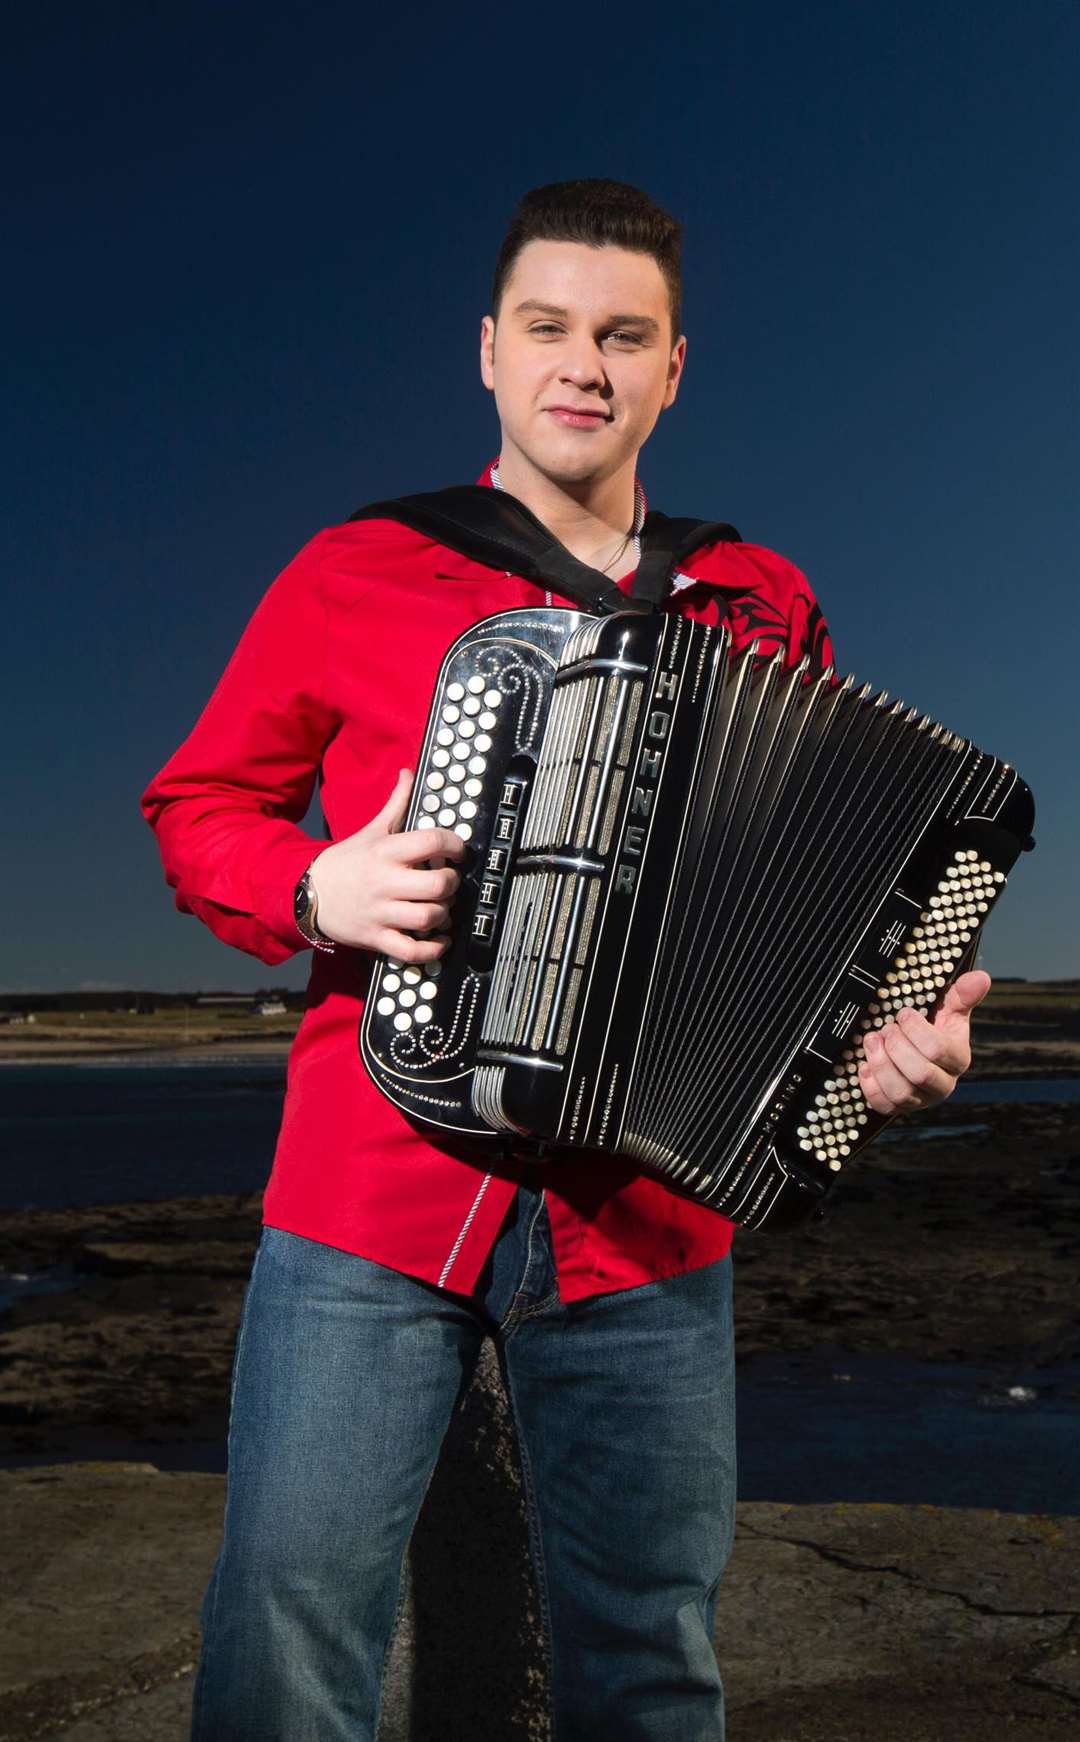 Scottish Accordion Champion Brandon McPhee will perform on stage at Elgin Town Hall next month.